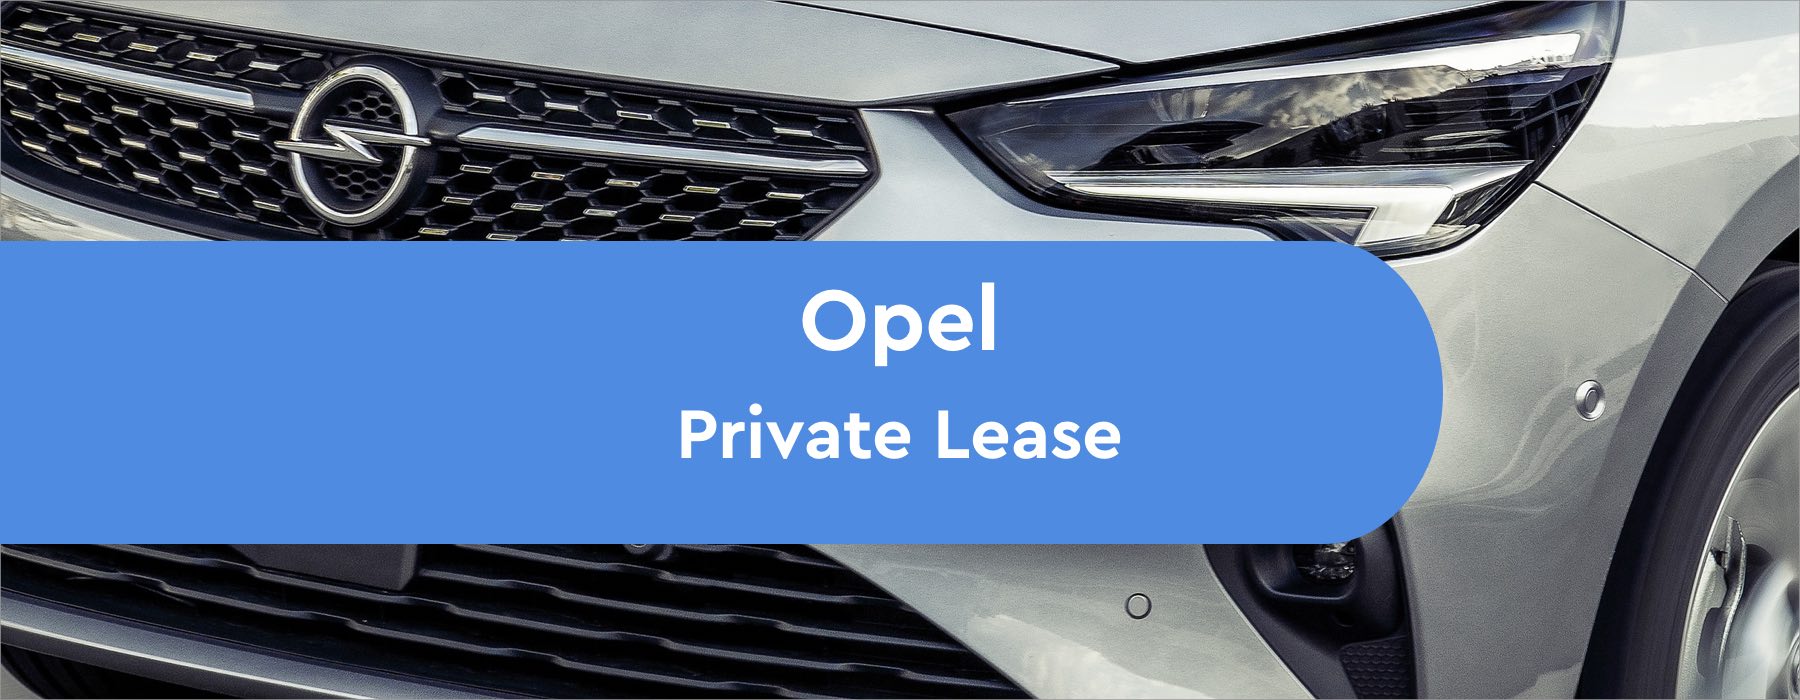 opel private lease Private Lease voorwaarden vergelijking